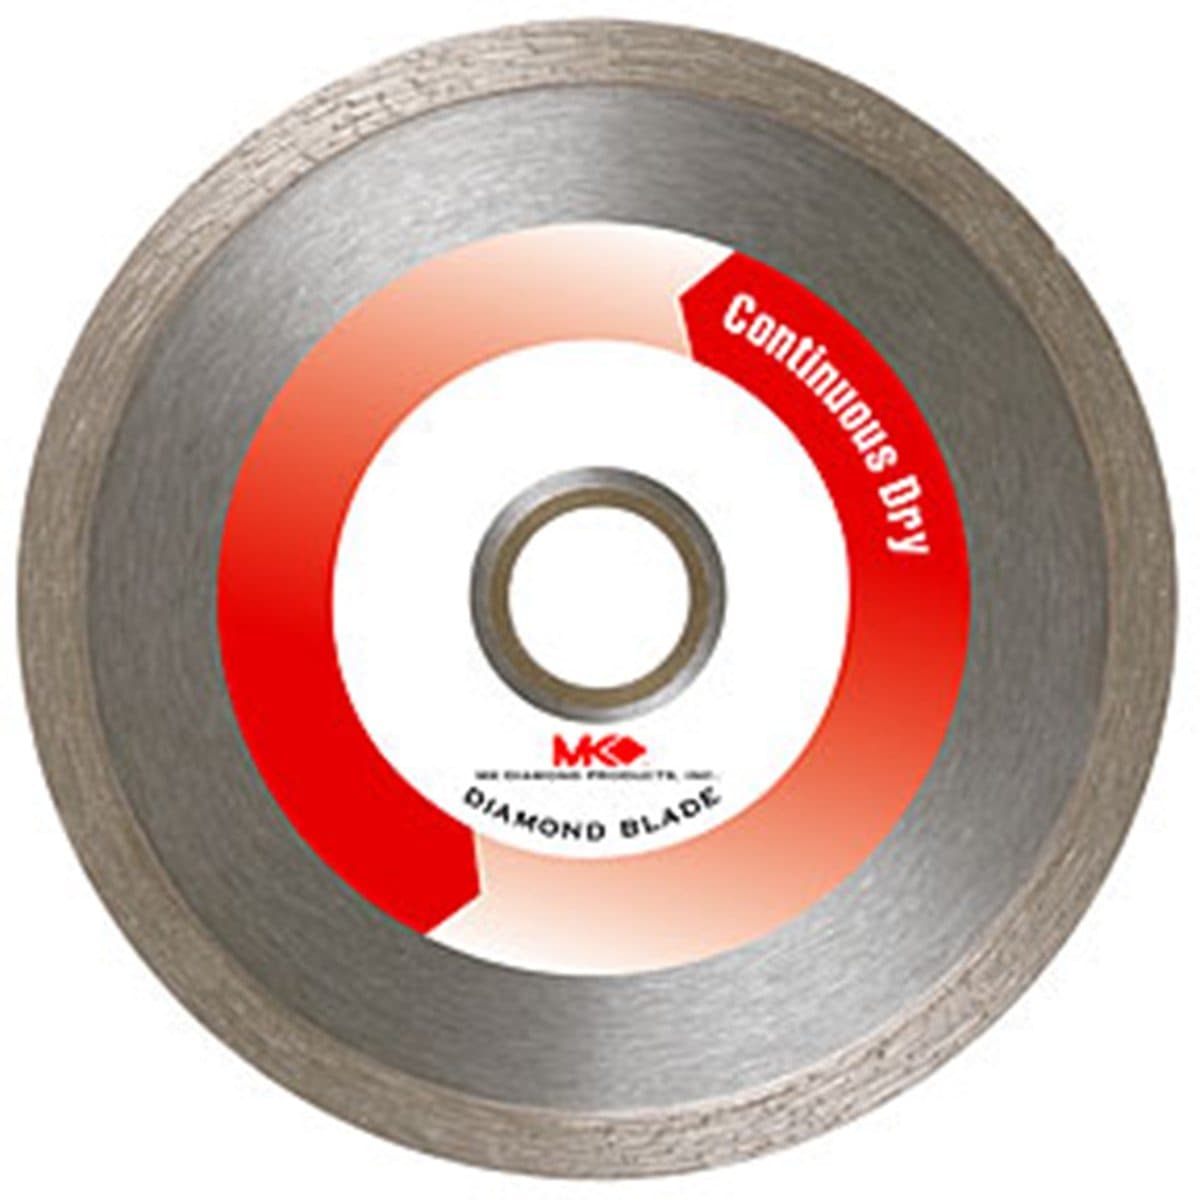 MK-304CR Hard Materials Dry Cutting Blade (Premium) - MK Diamond